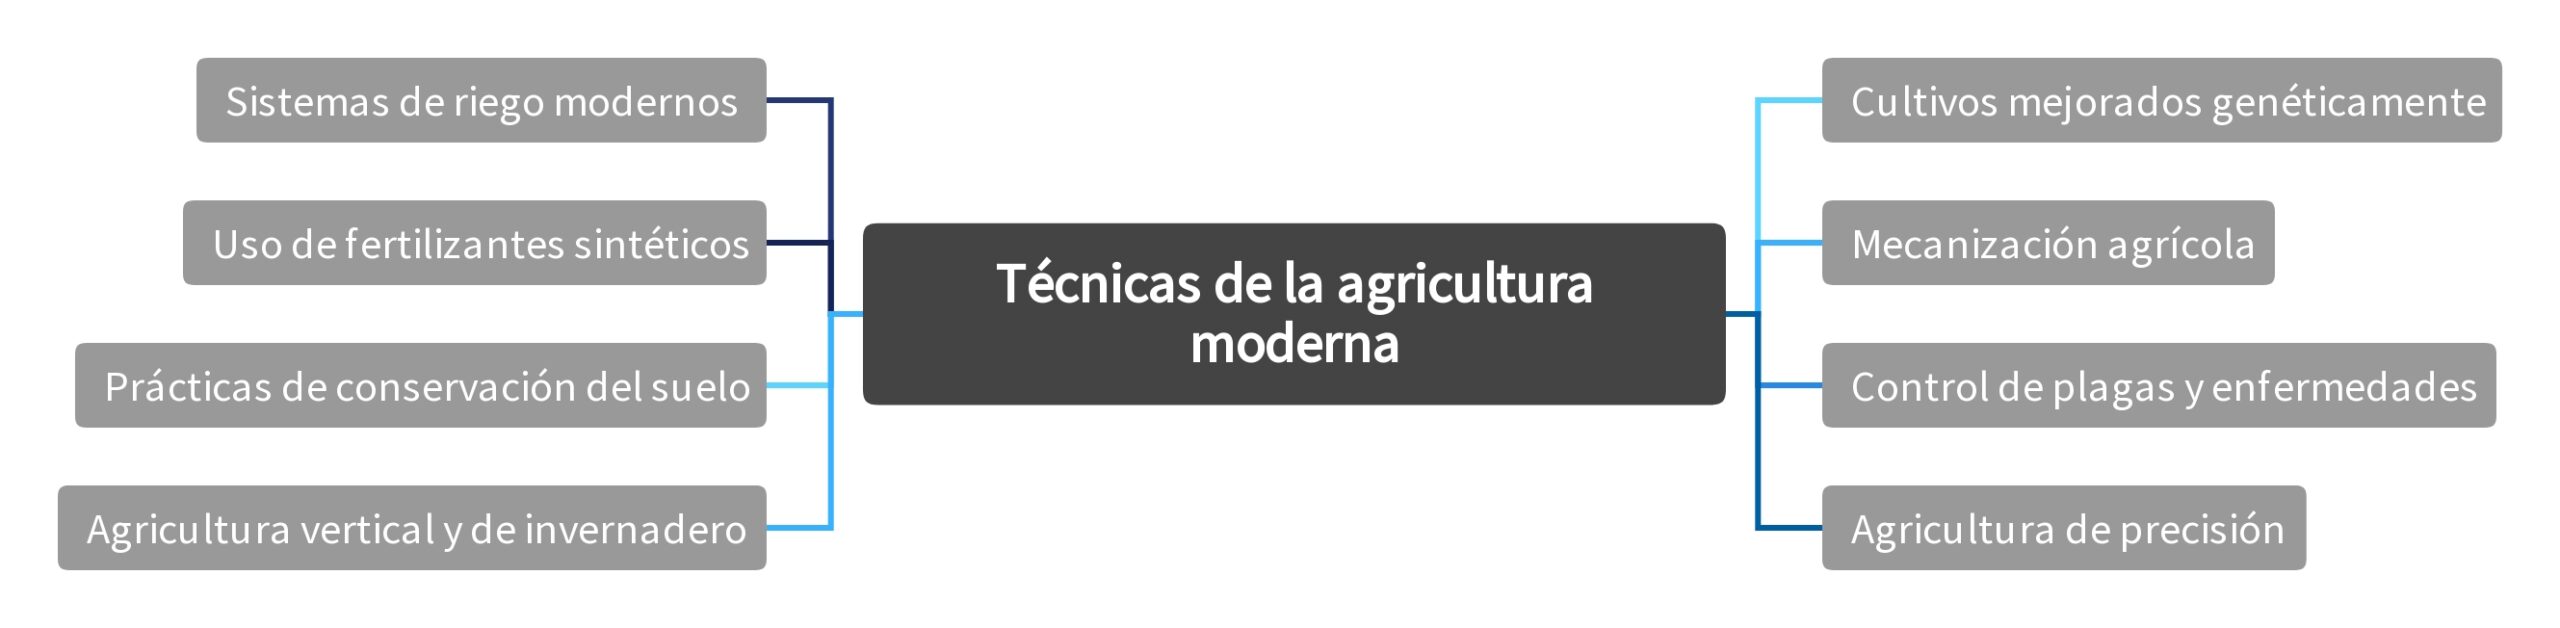 Técnicas de la agricultura moderna